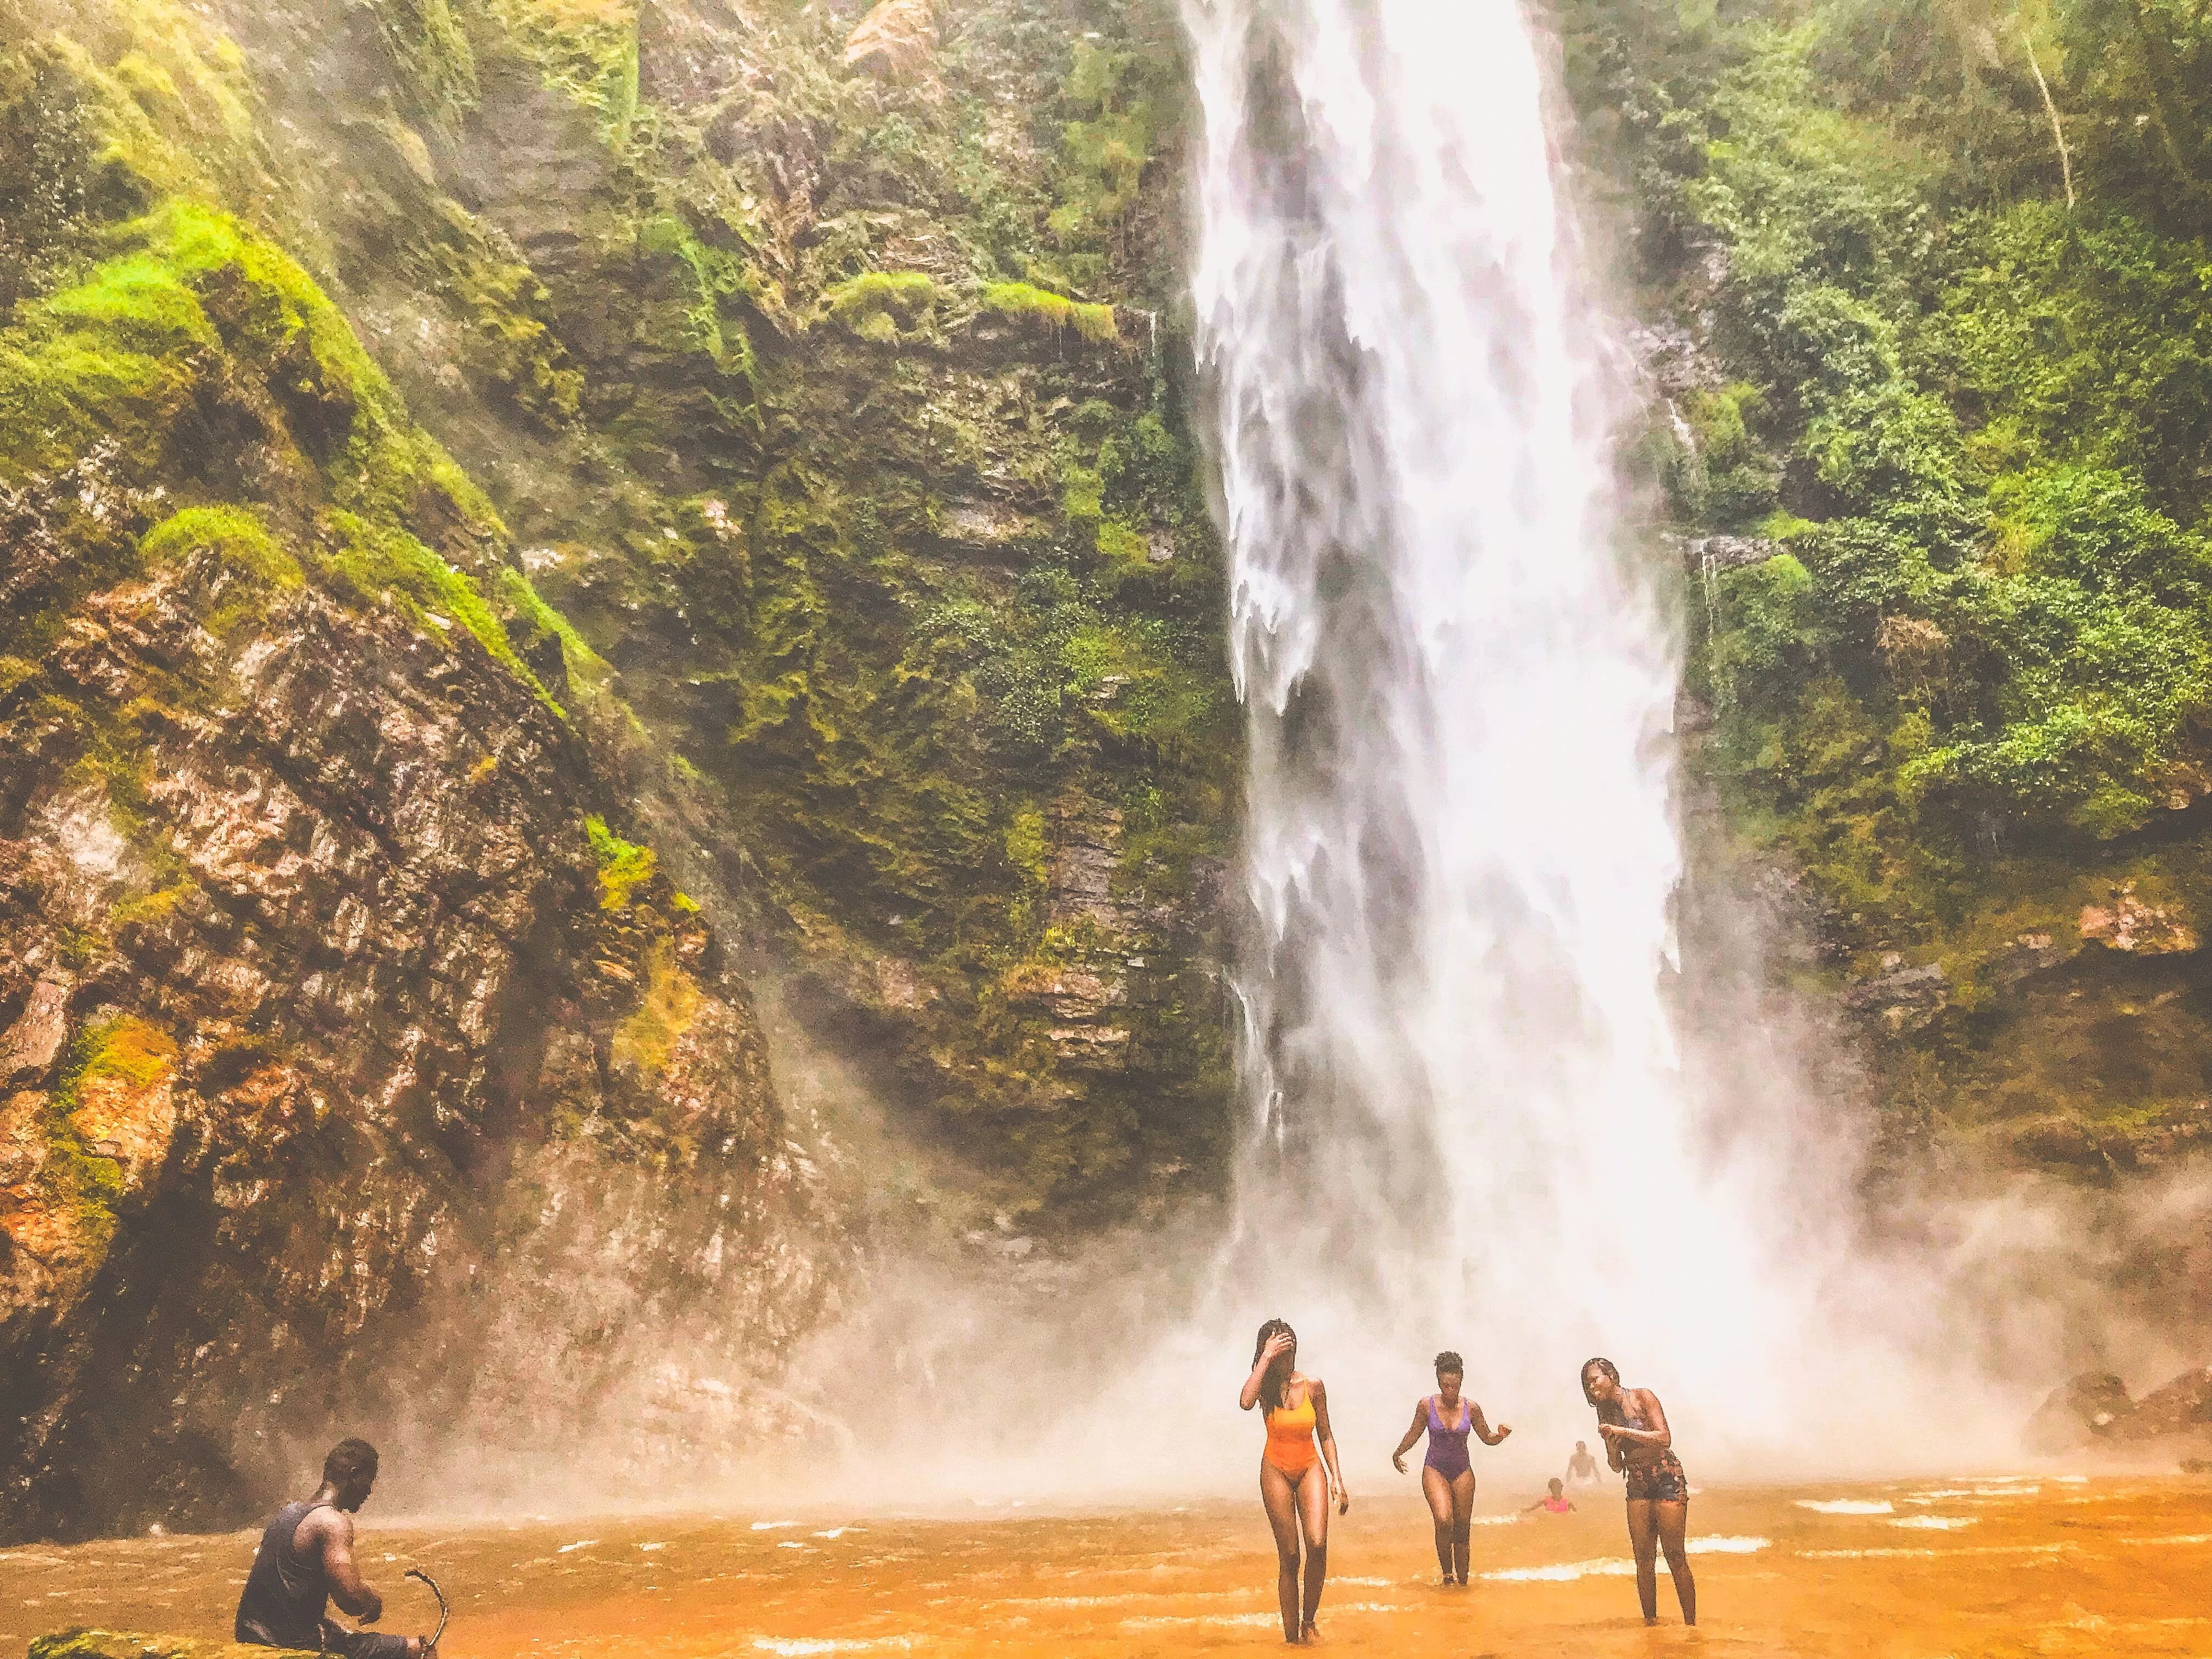 Wli Waterfalls in Ghana, Africa | Waterfalls - Rated 0.8